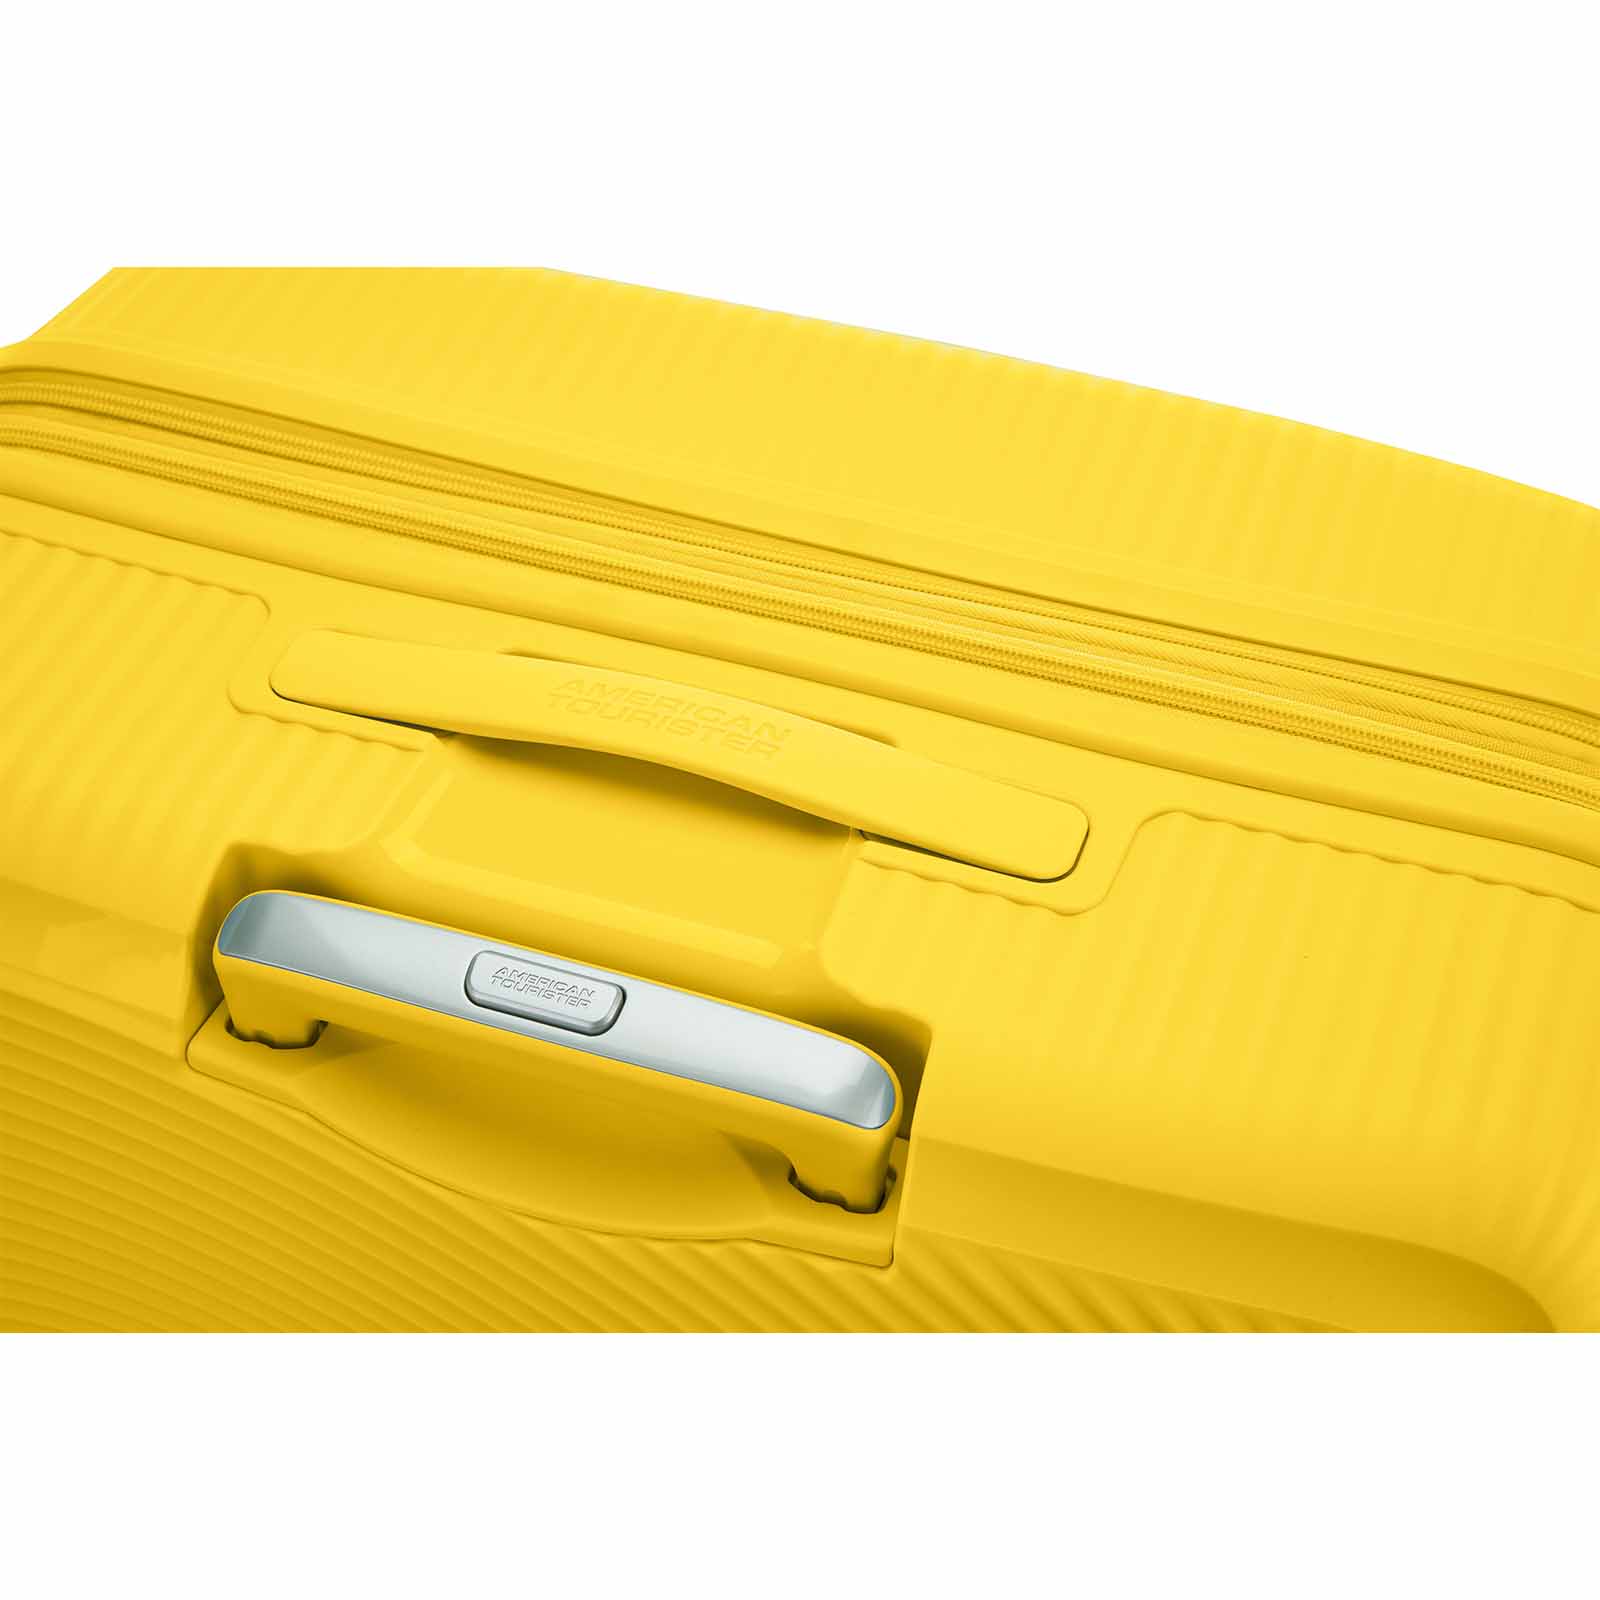 American-Tourister-Curio-2-80cm-Suitcase-Golden-Yellow-Handle